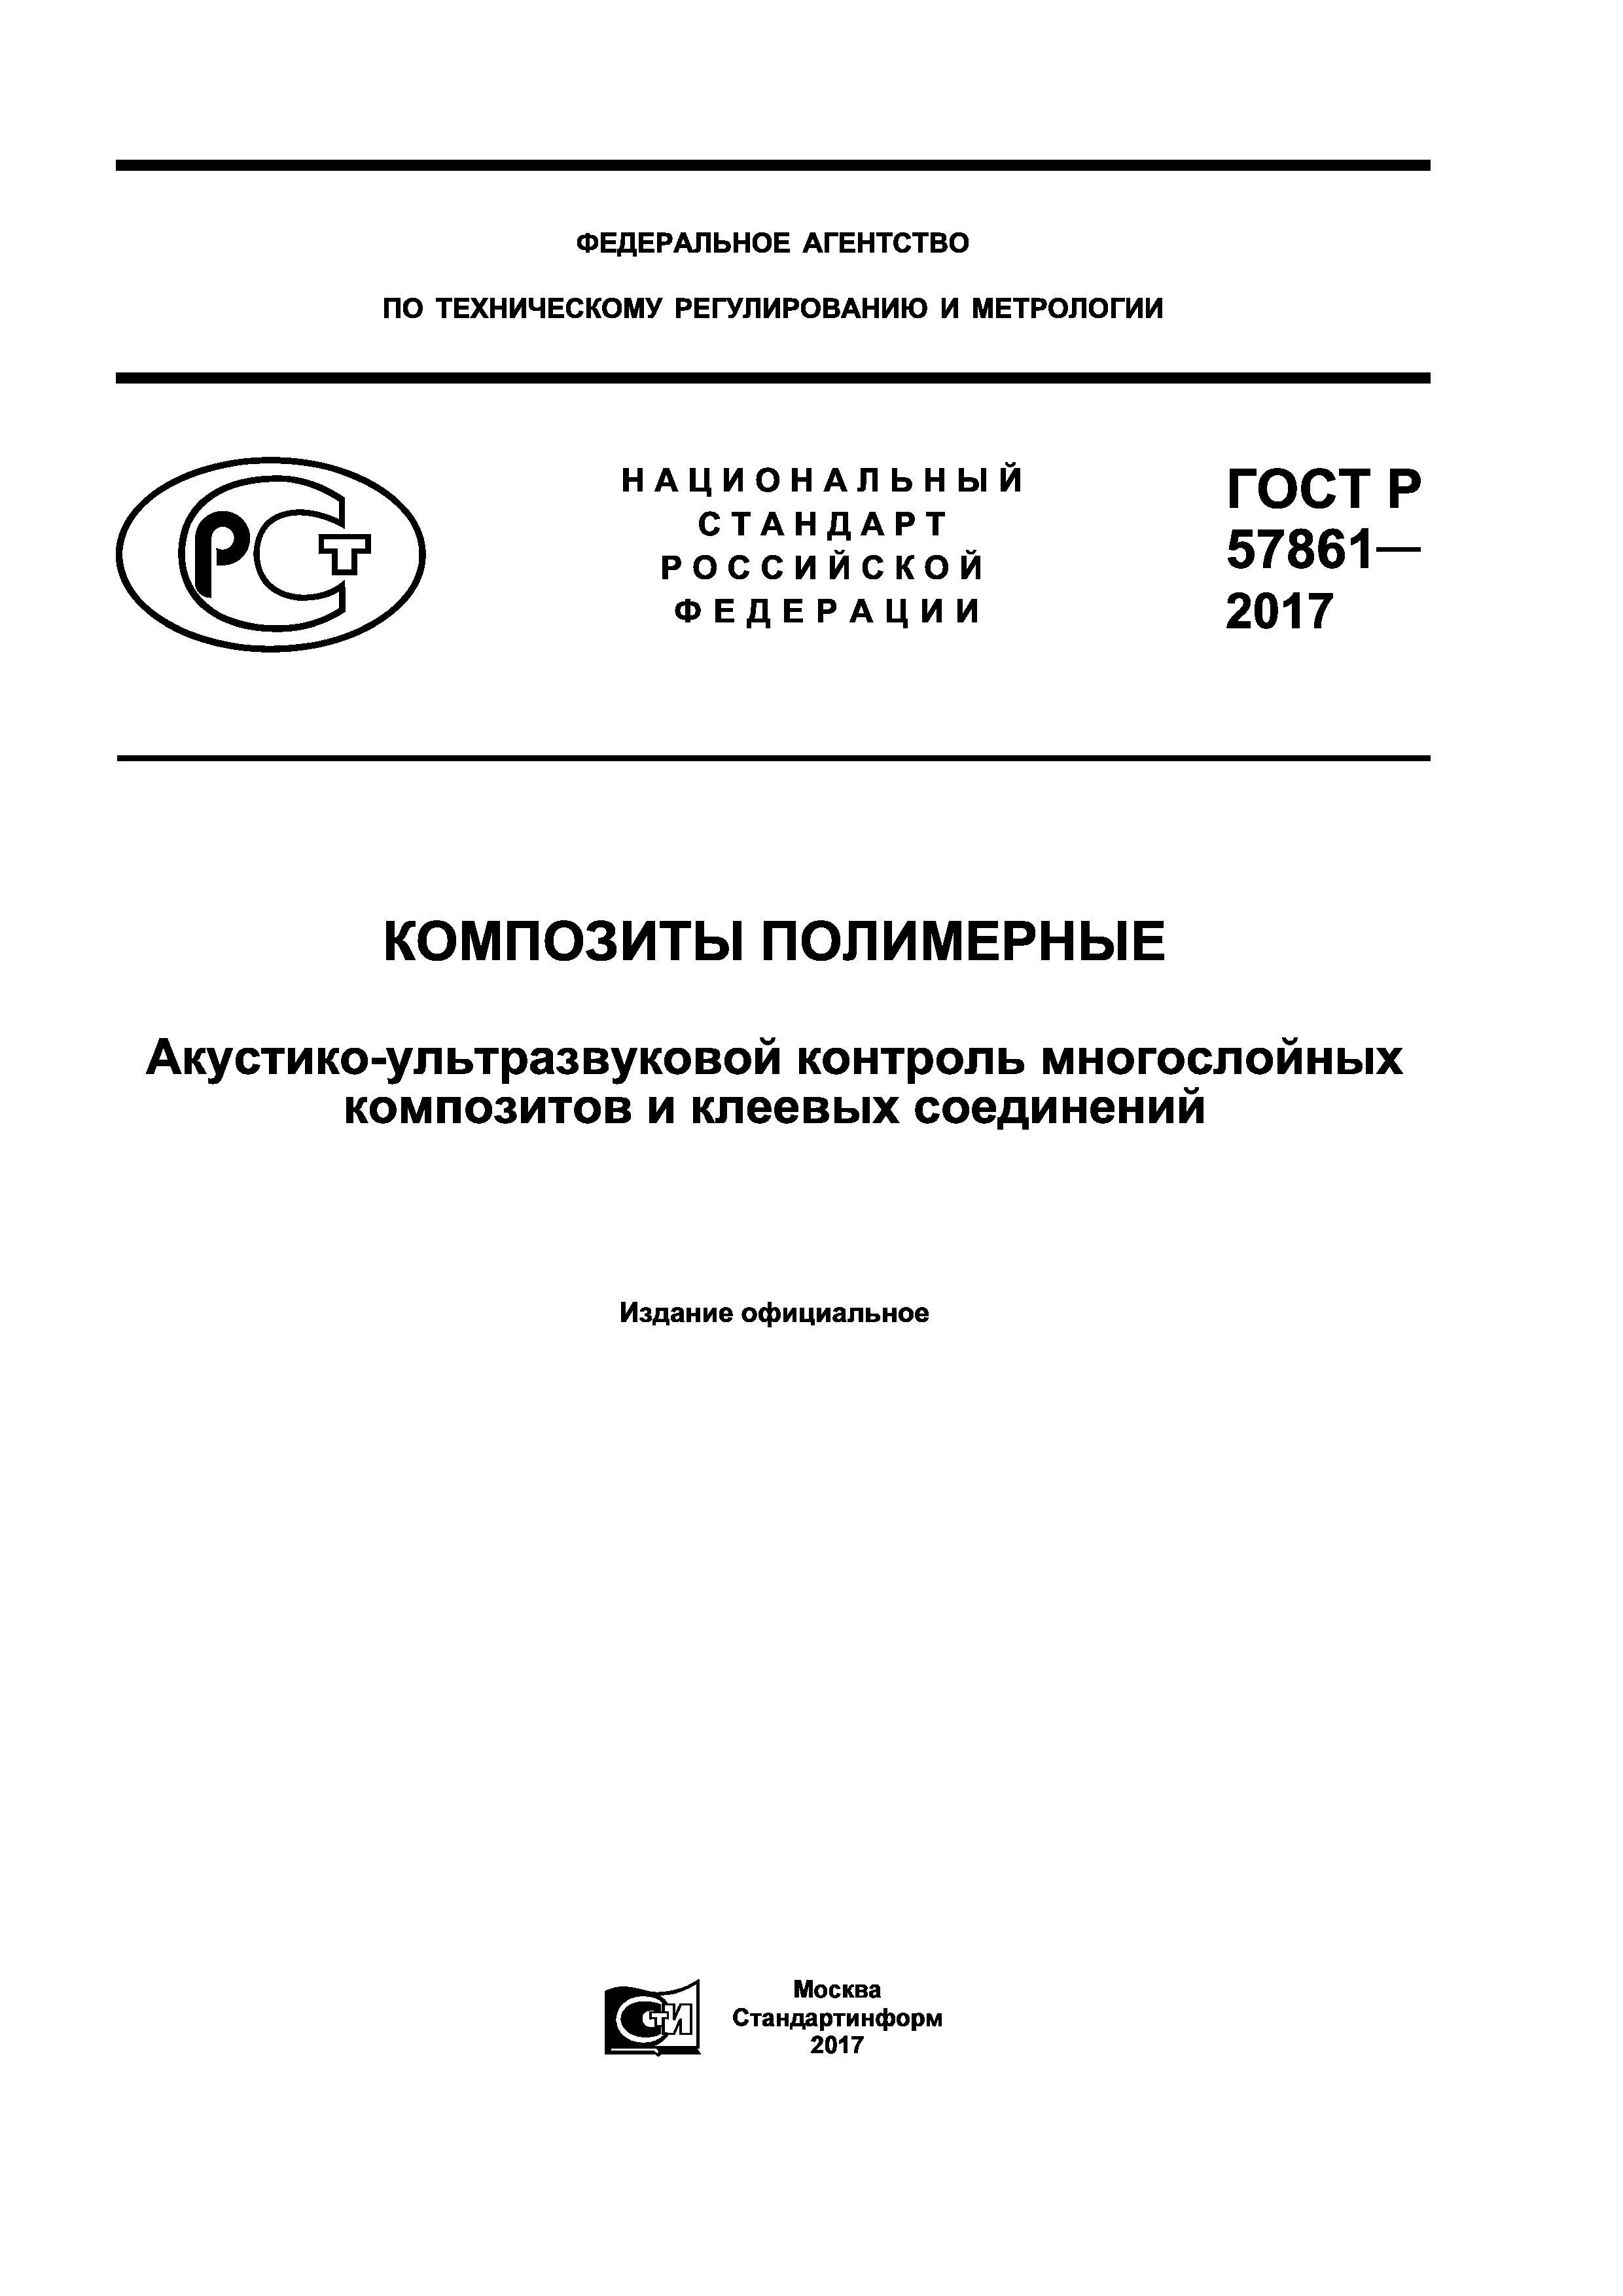 ГОСТ Р 57861-2017